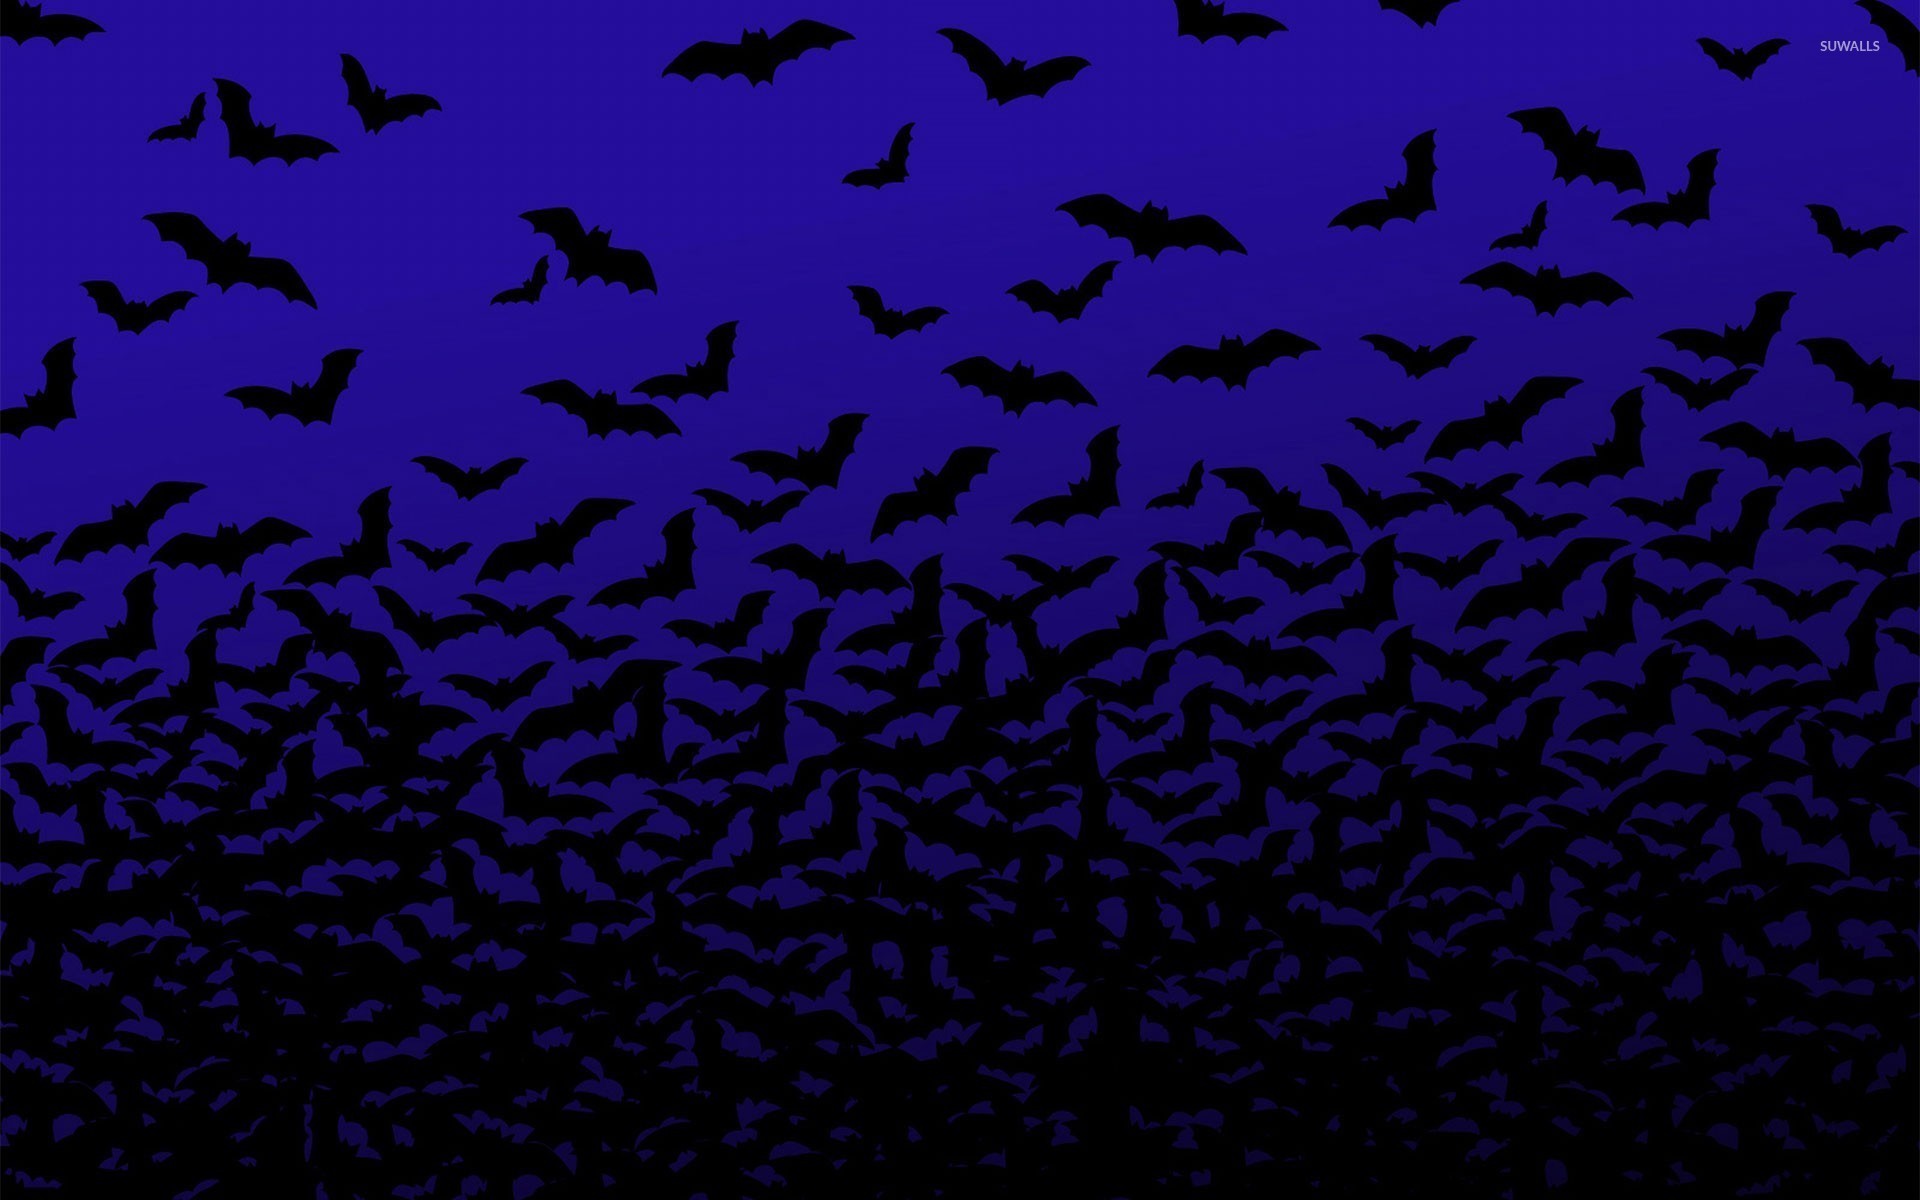 27 Cute Halloween Wallpaper Ideas  Its freakin bats  Idea Wallpapers   iPhone WallpapersColor Schemes